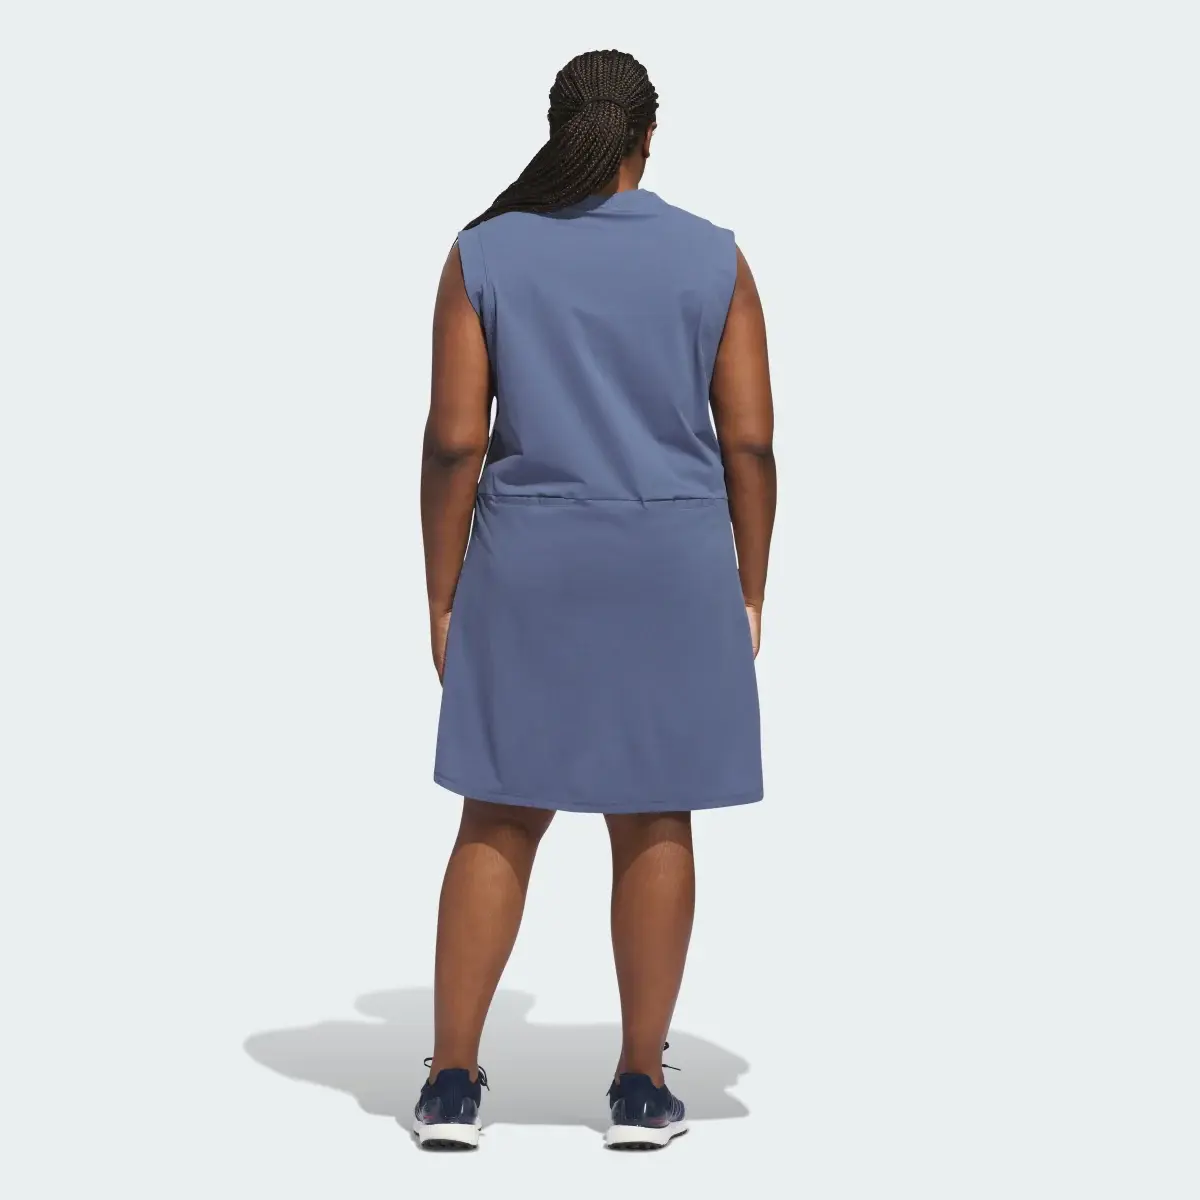 Adidas Ultimate365 TWISTKNIT Dress (Plus Size). 3